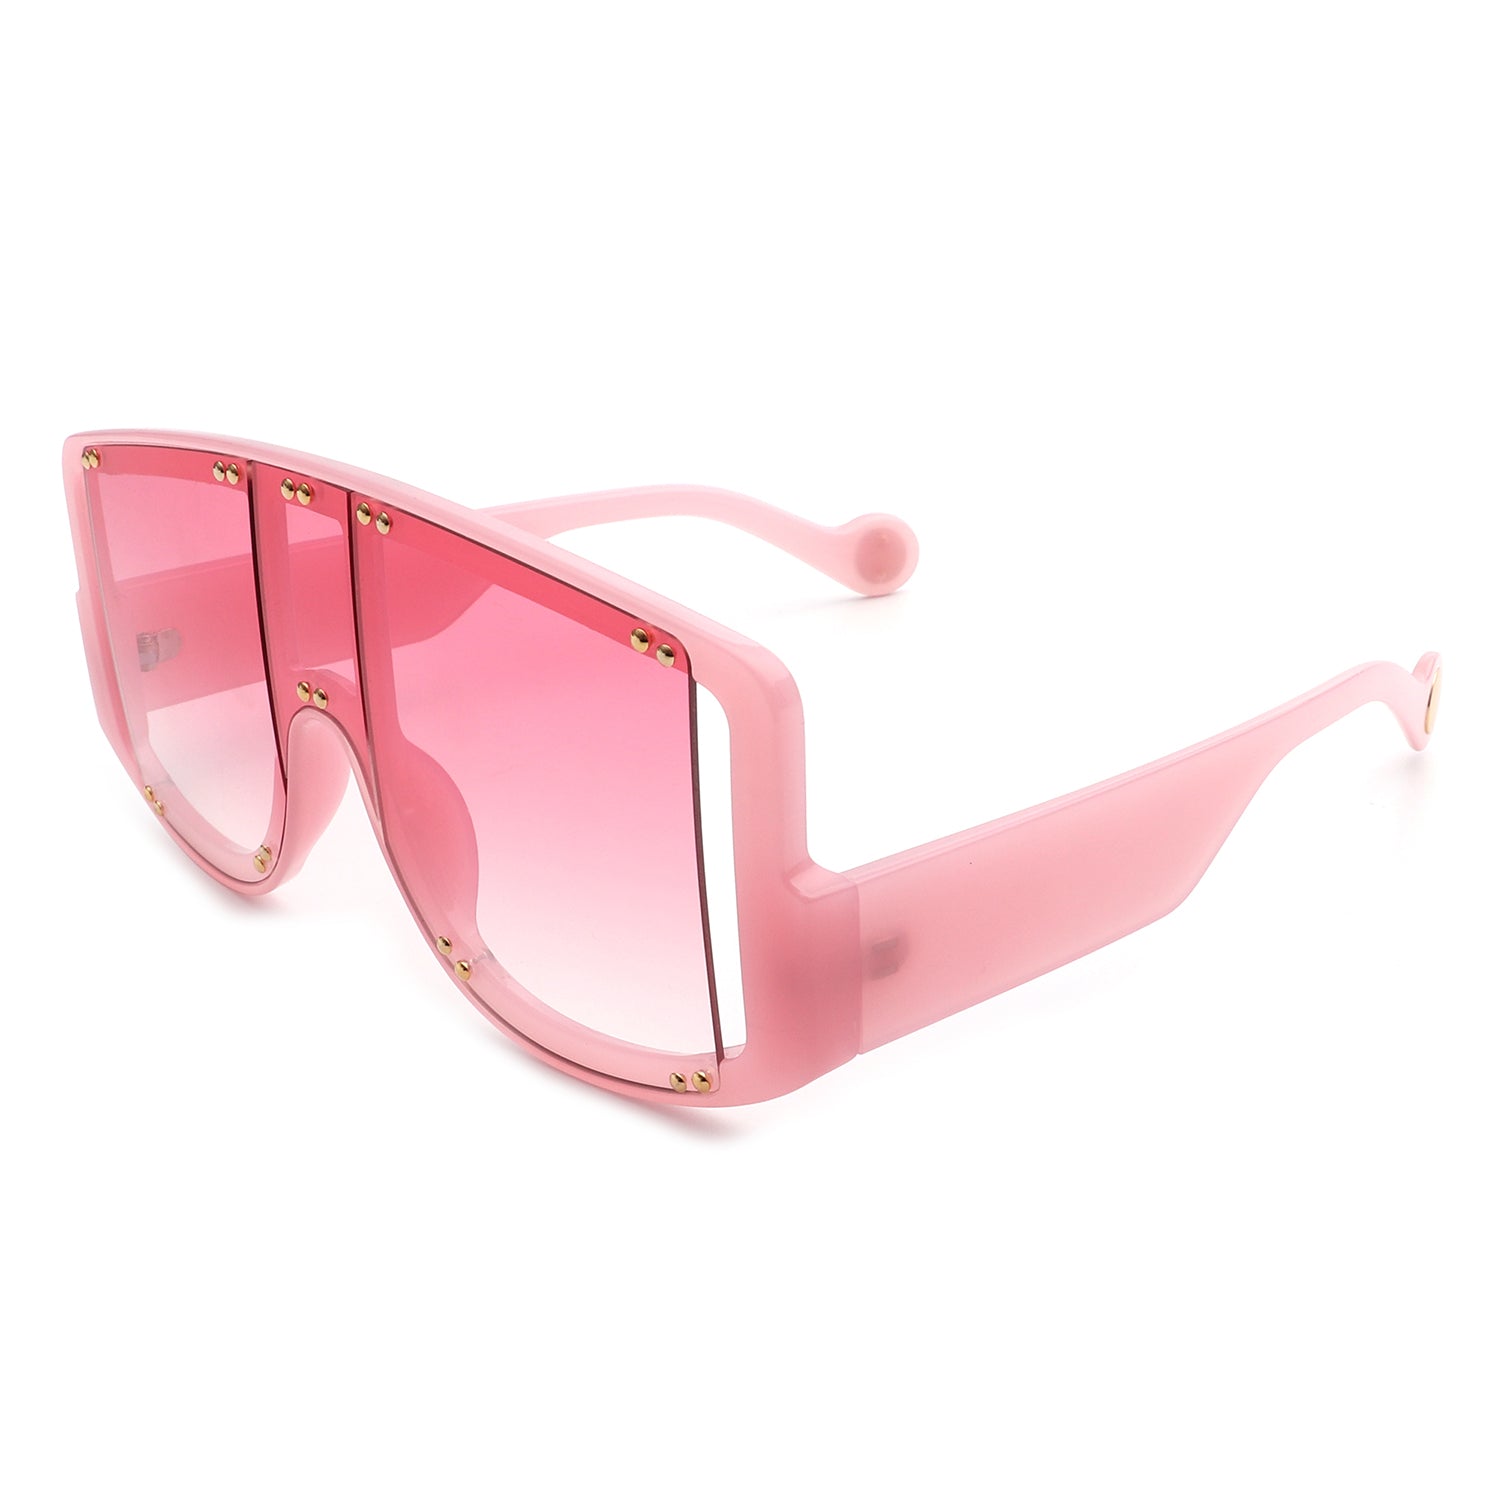 Empire Cove Polygon Sunglasses Metal Frame Classic Gradient Shades UV Protection, Gold/Smoke